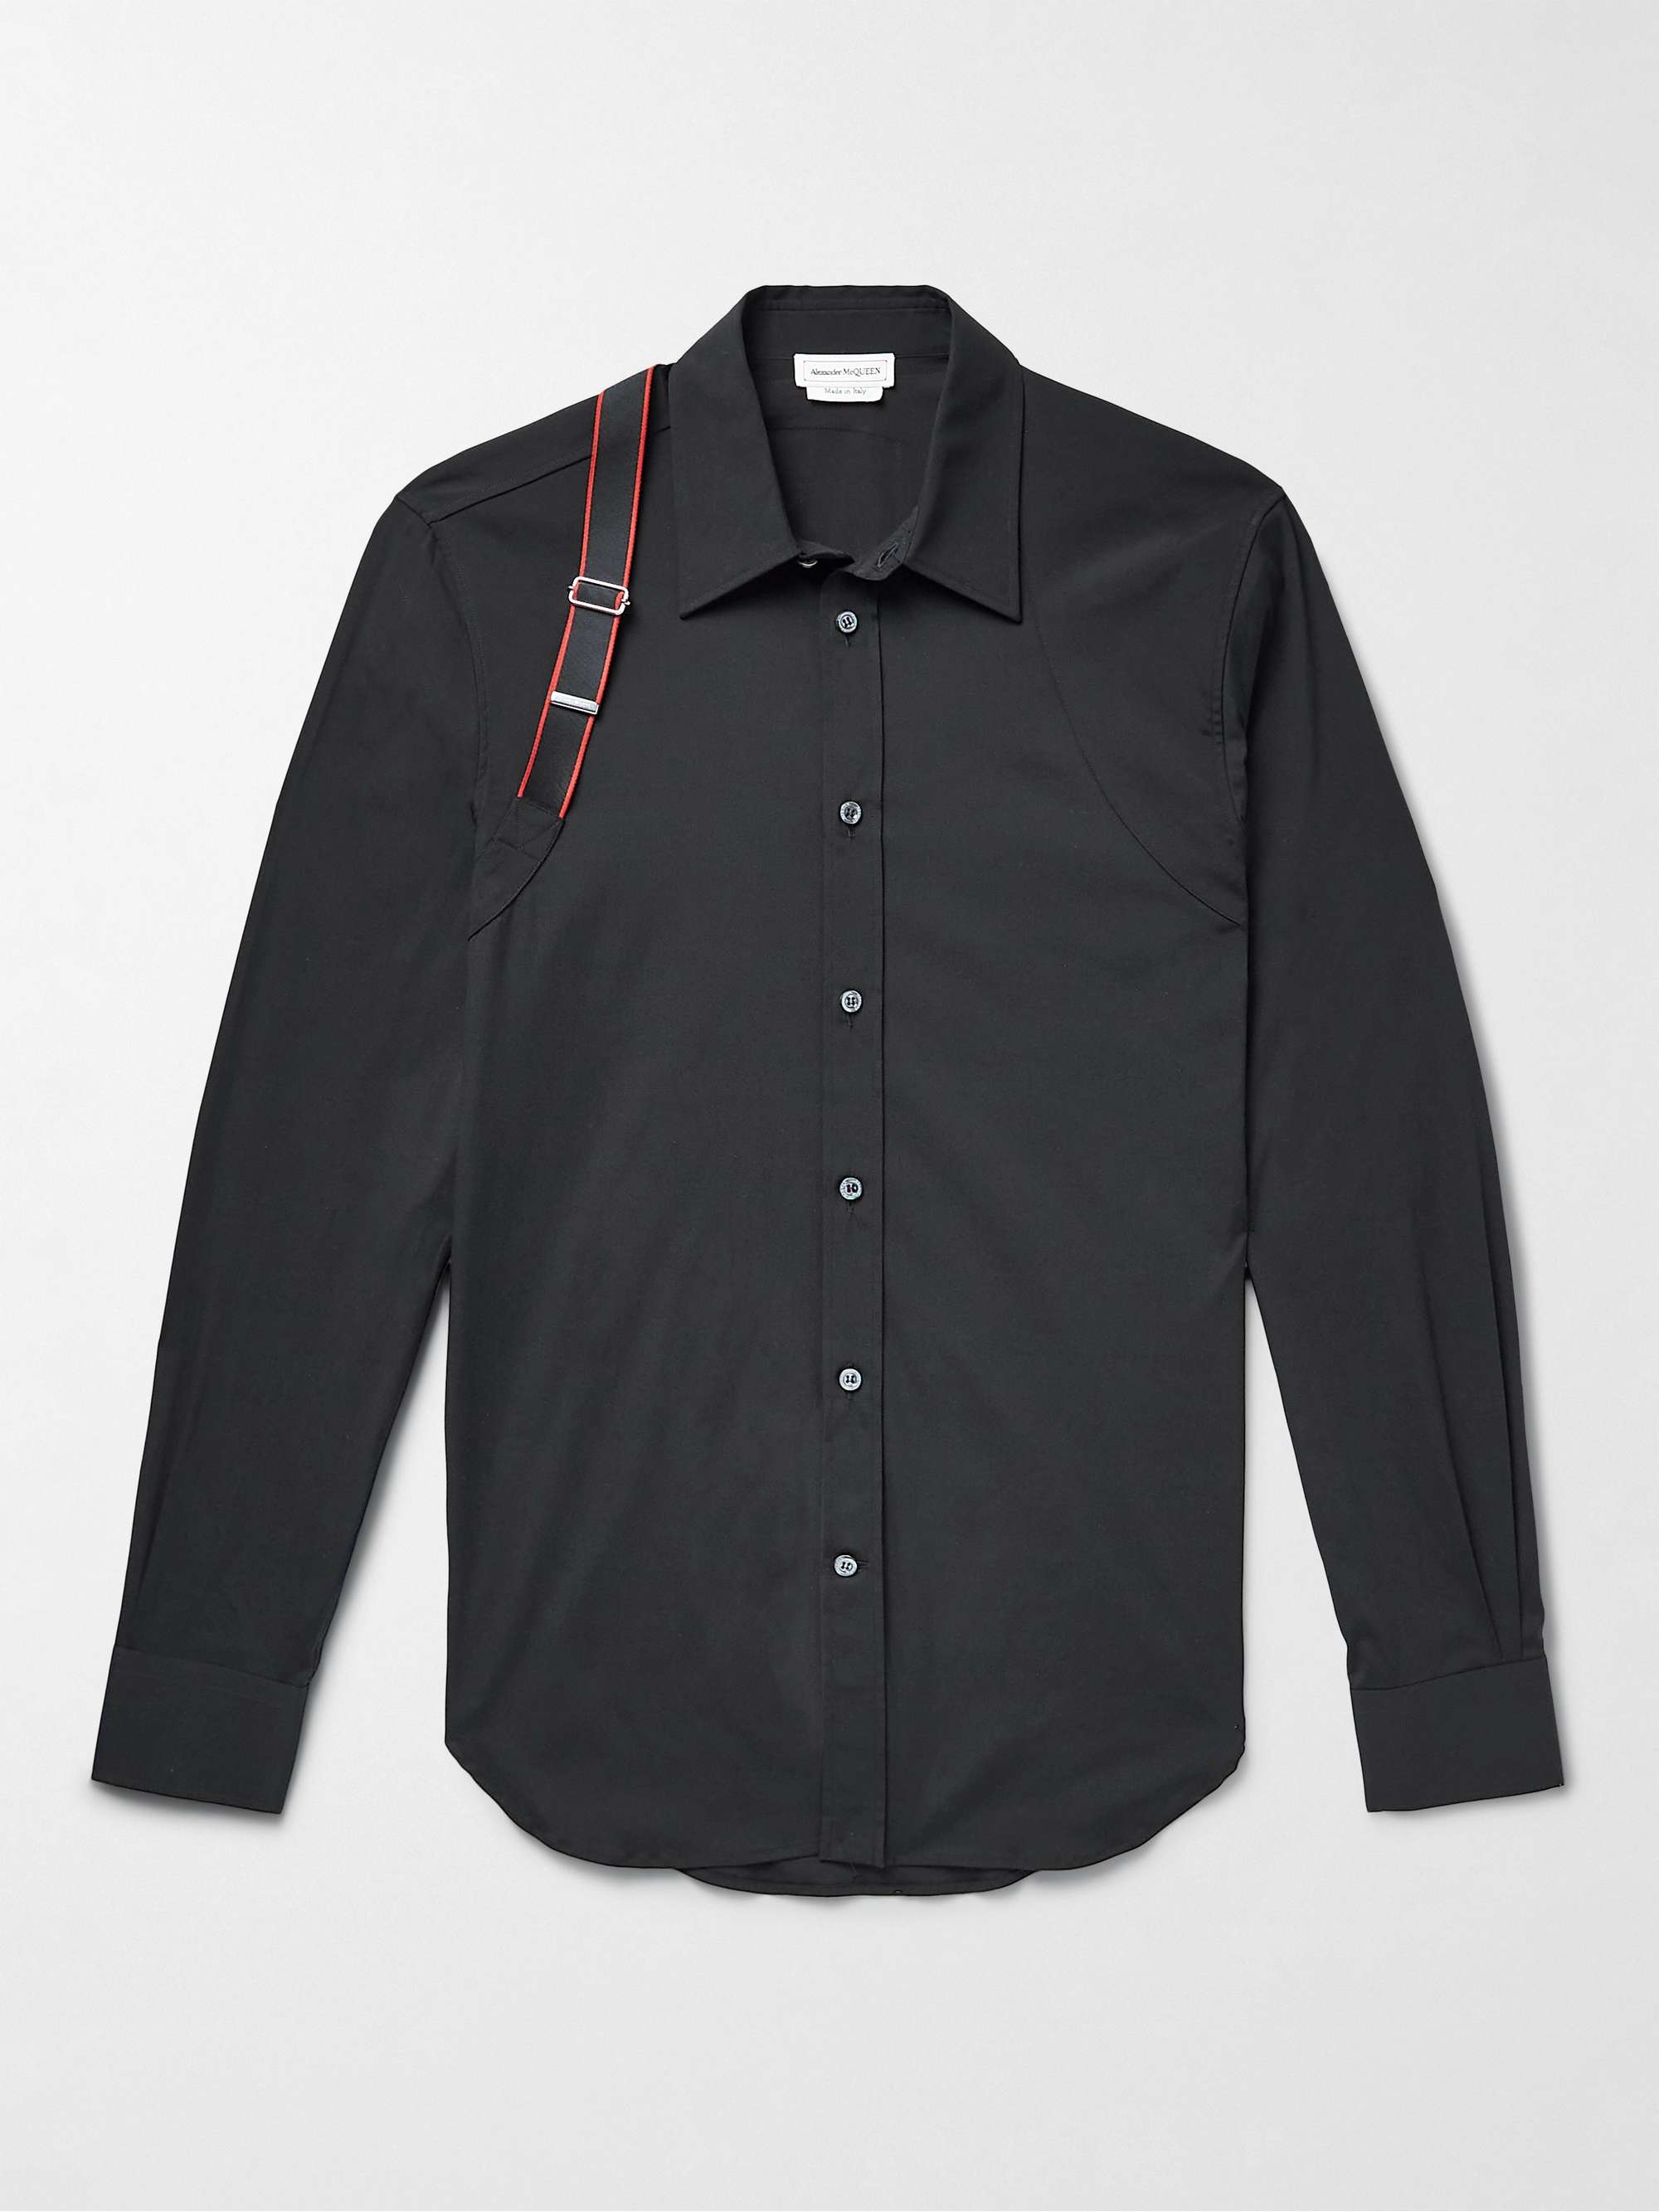 ALEXANDER MCQUEEN Harness-Detailed Cotton-Blend Shirt for Men | MR PORTER